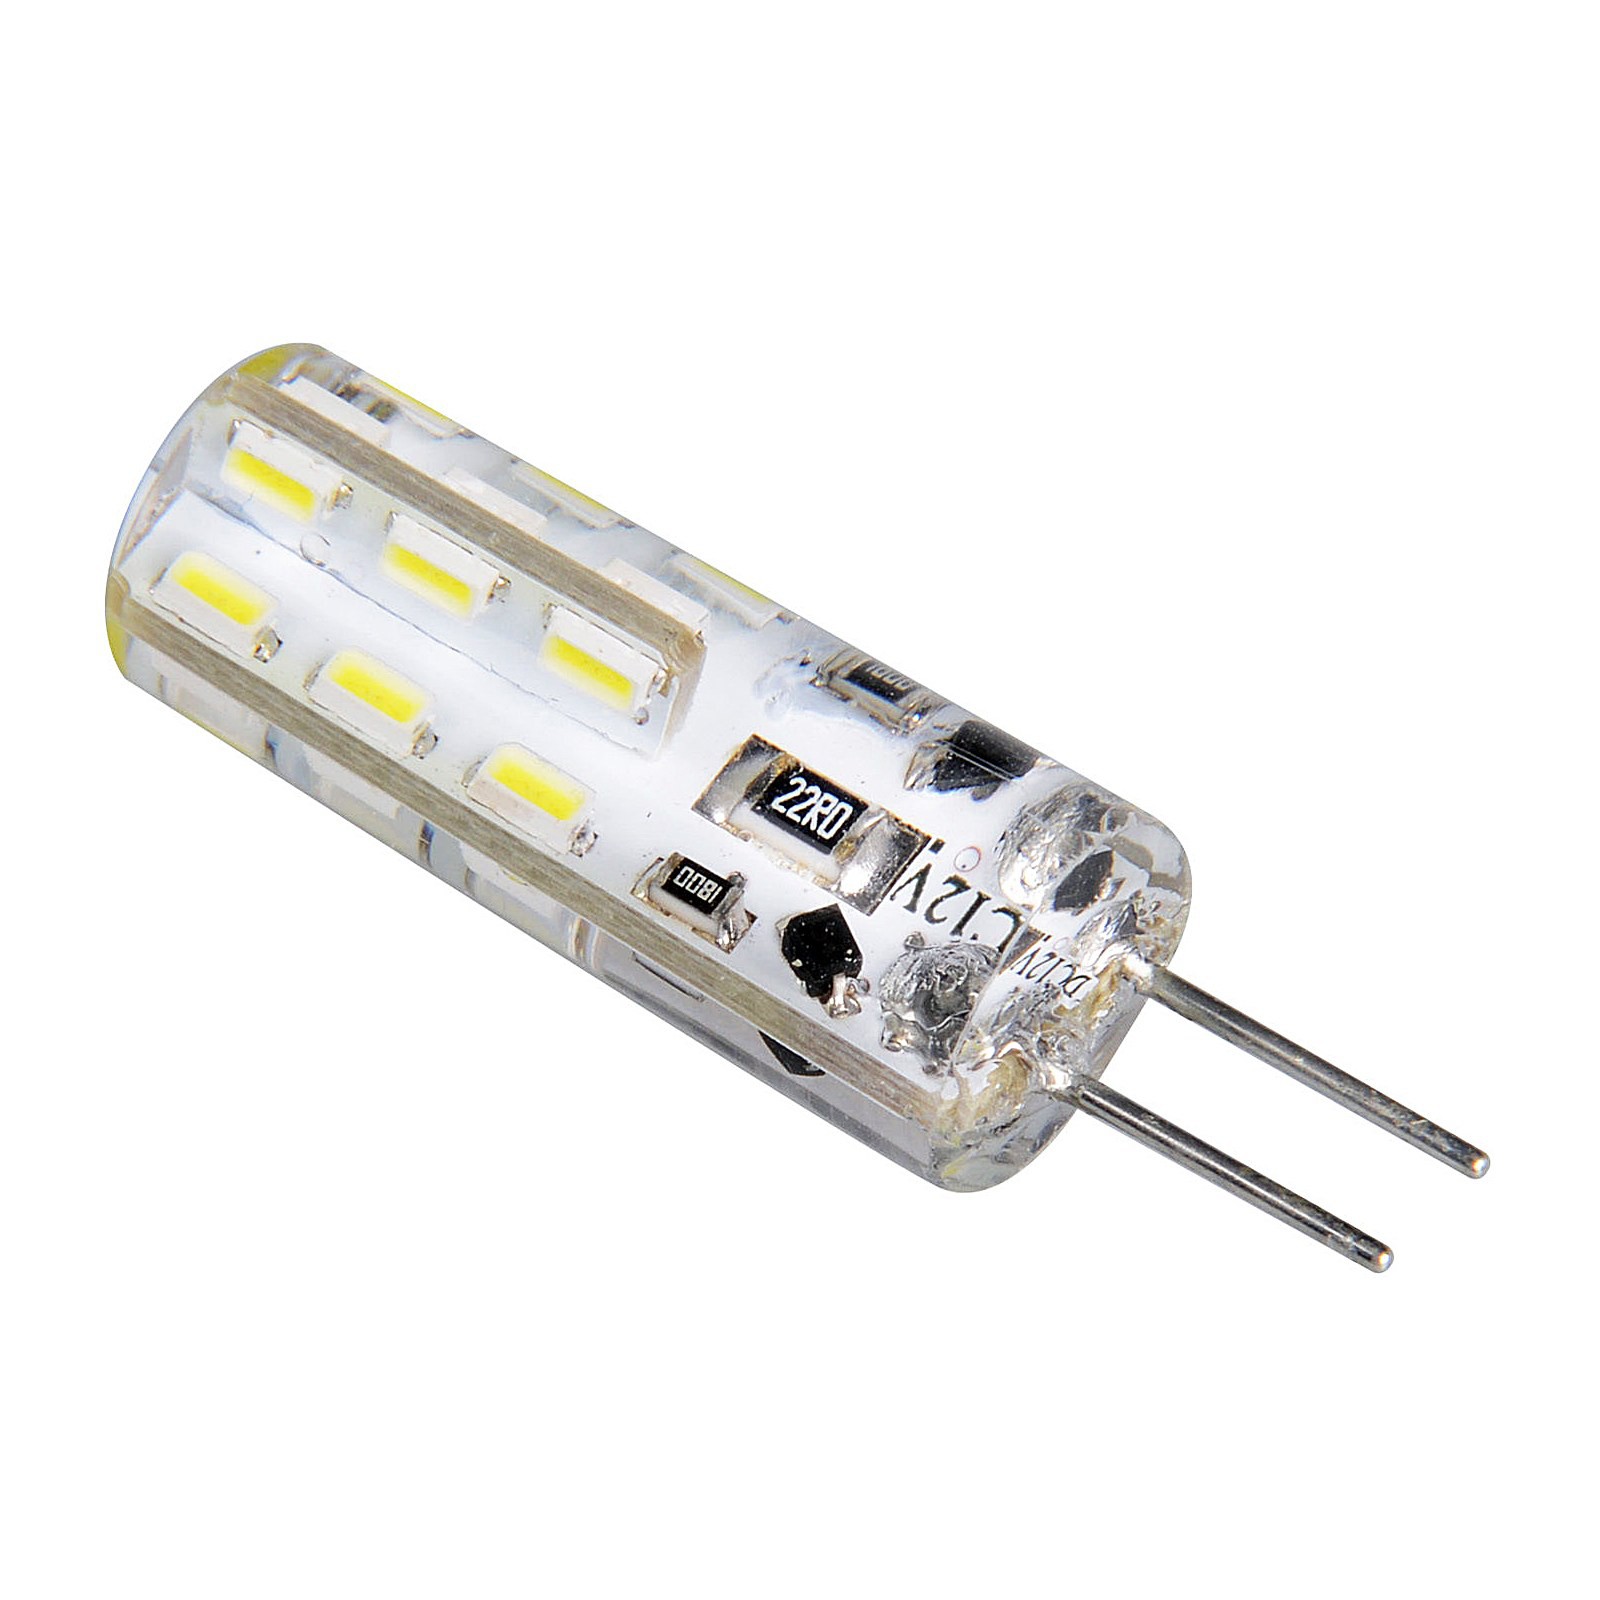 Lampada Lampadina G4 per Faretto LED SMD 12V LIFE 1,5 WATT Luce Bianca  Fredda - Area Illumina